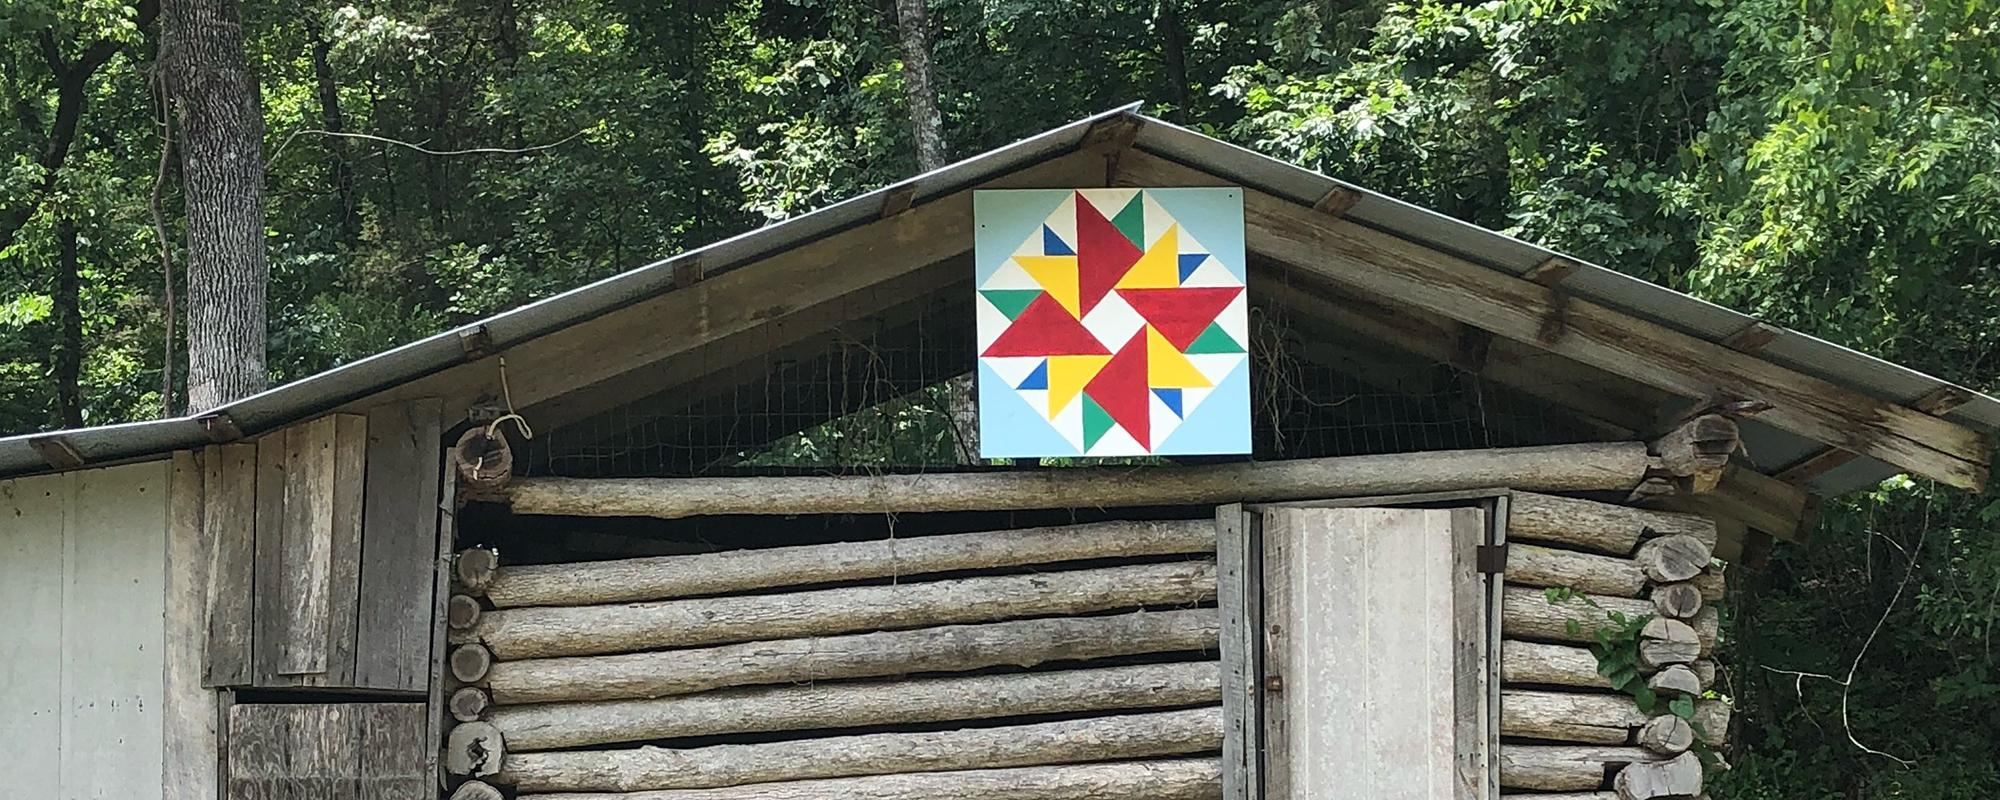 Community Education Barn Quilts